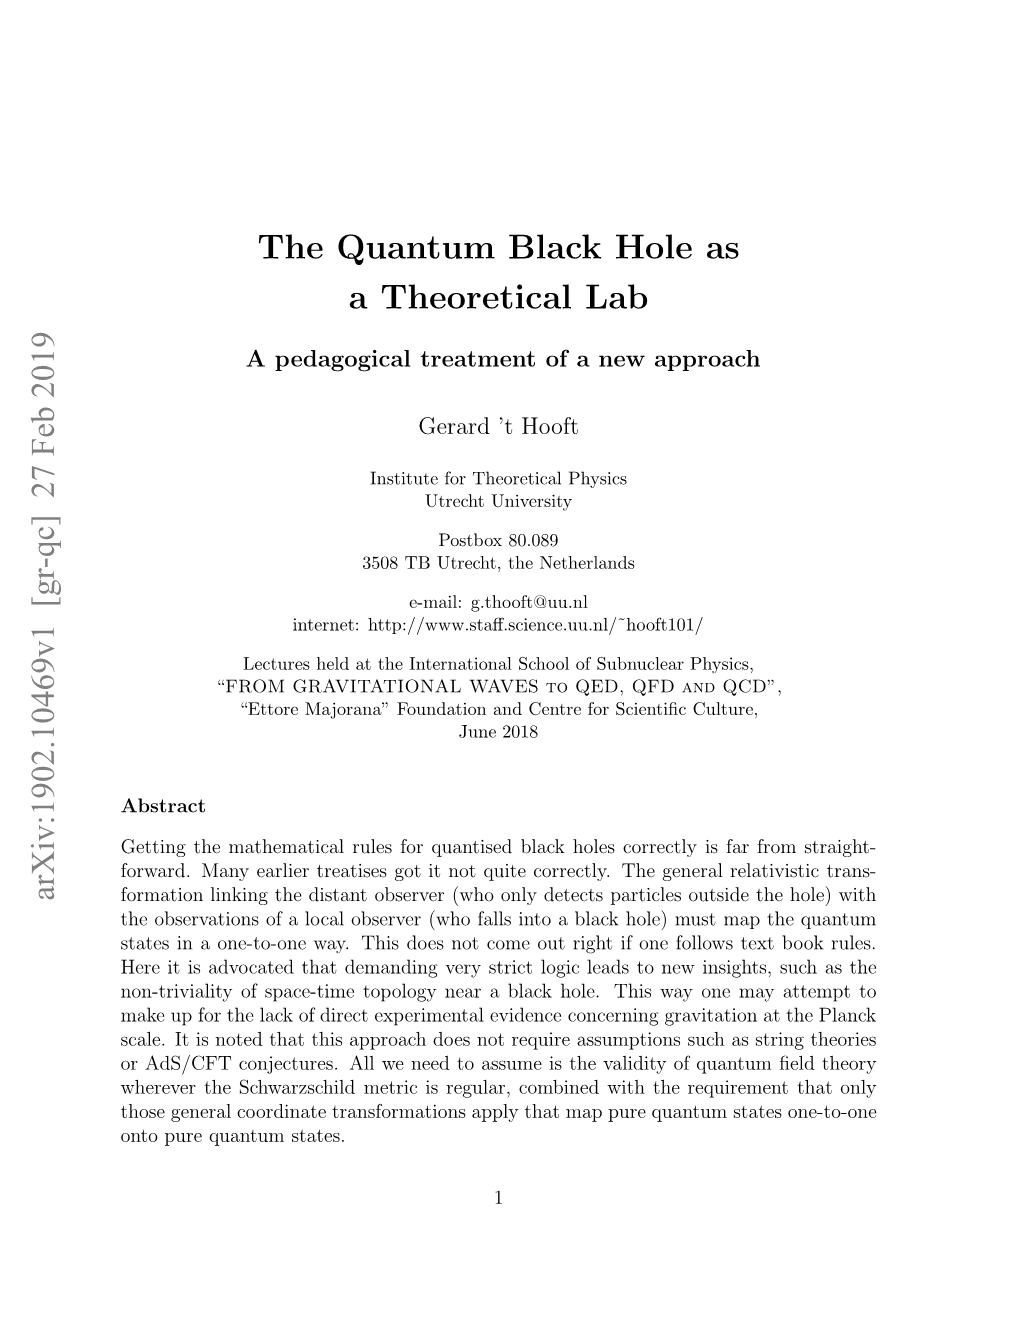 The Quantum Black Hole As a Theoretical Lab, a Pedagogical